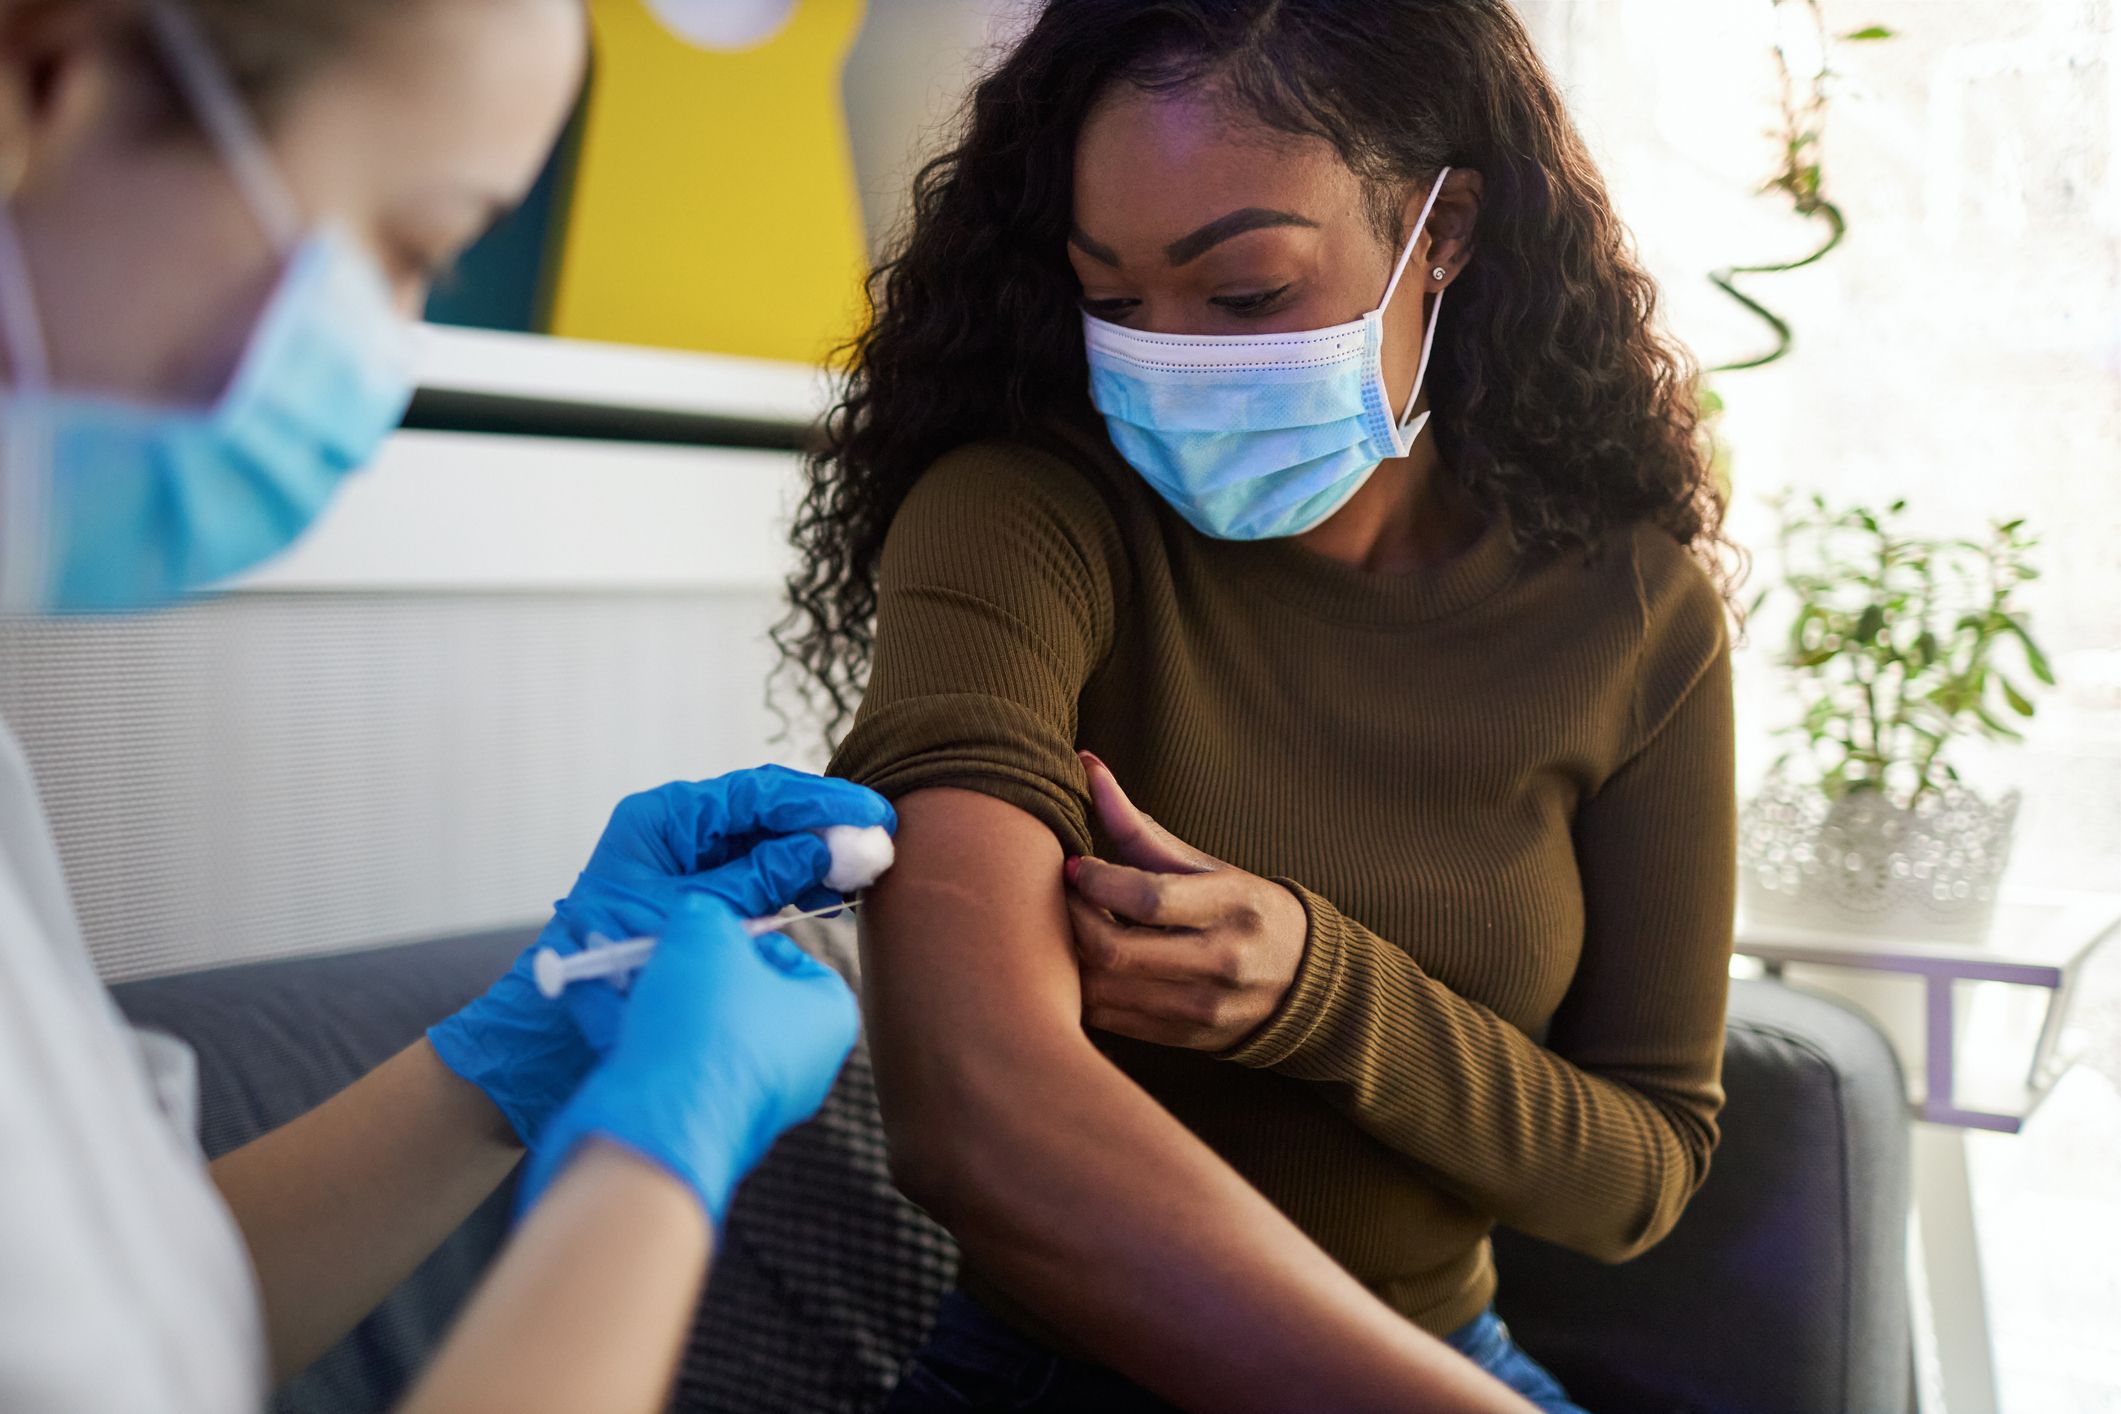 Adolescent COVID-19 vaccinations lag across US